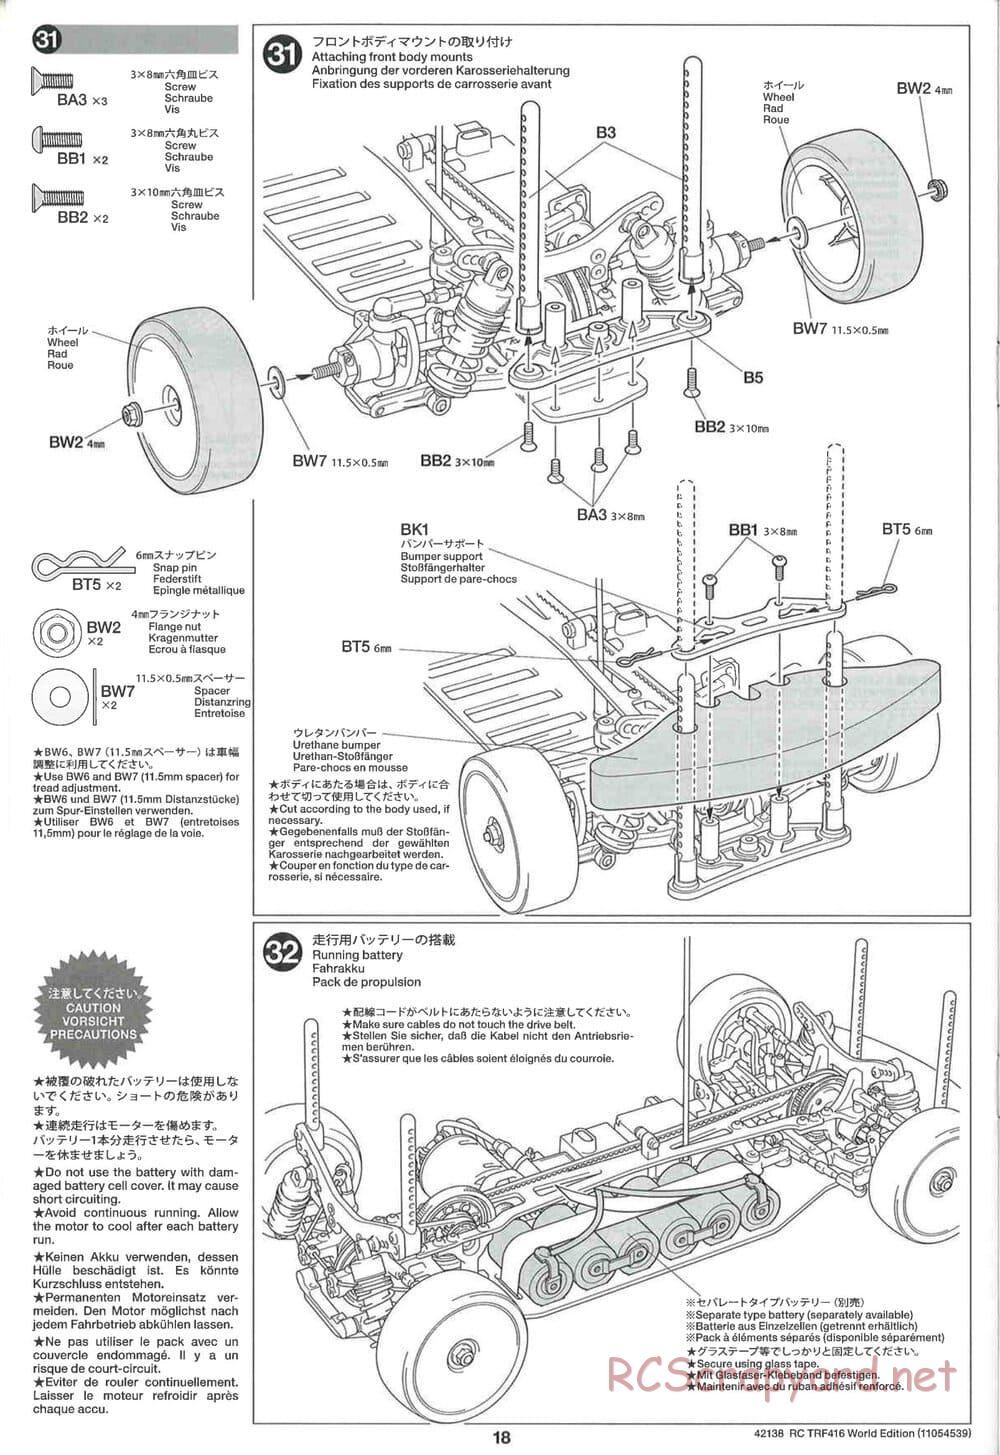 Tamiya - TRF416 World Edition Chassis - Manual - Page 18